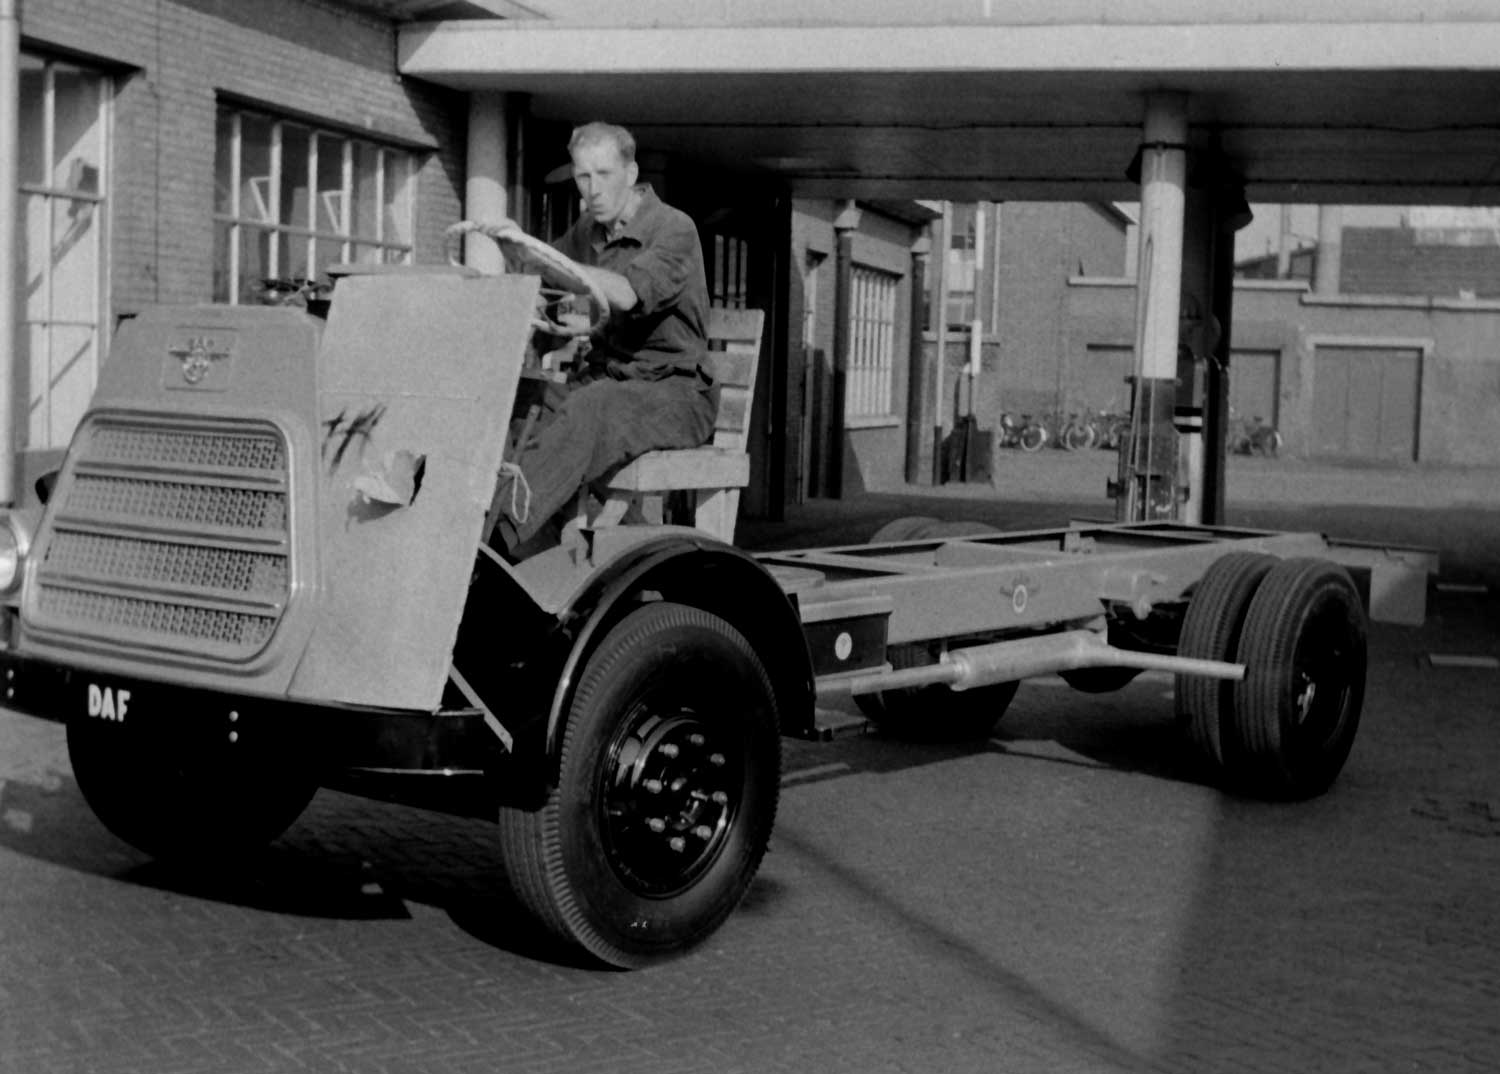 RAC, DAF diesel, 1e van der Kunstraat, jaren 50